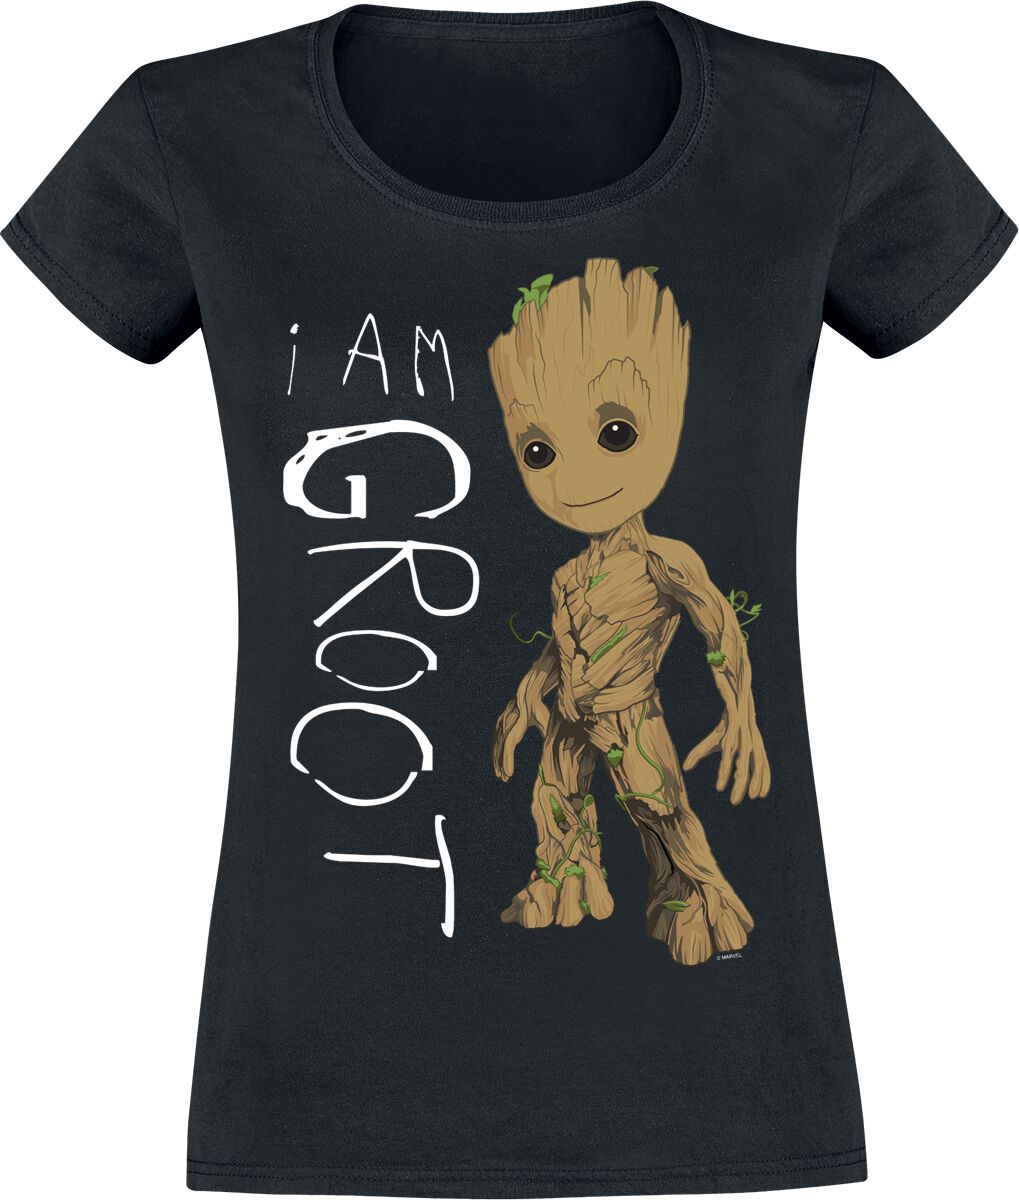 Am Groot" T-Shirt Guardians The Galaxy